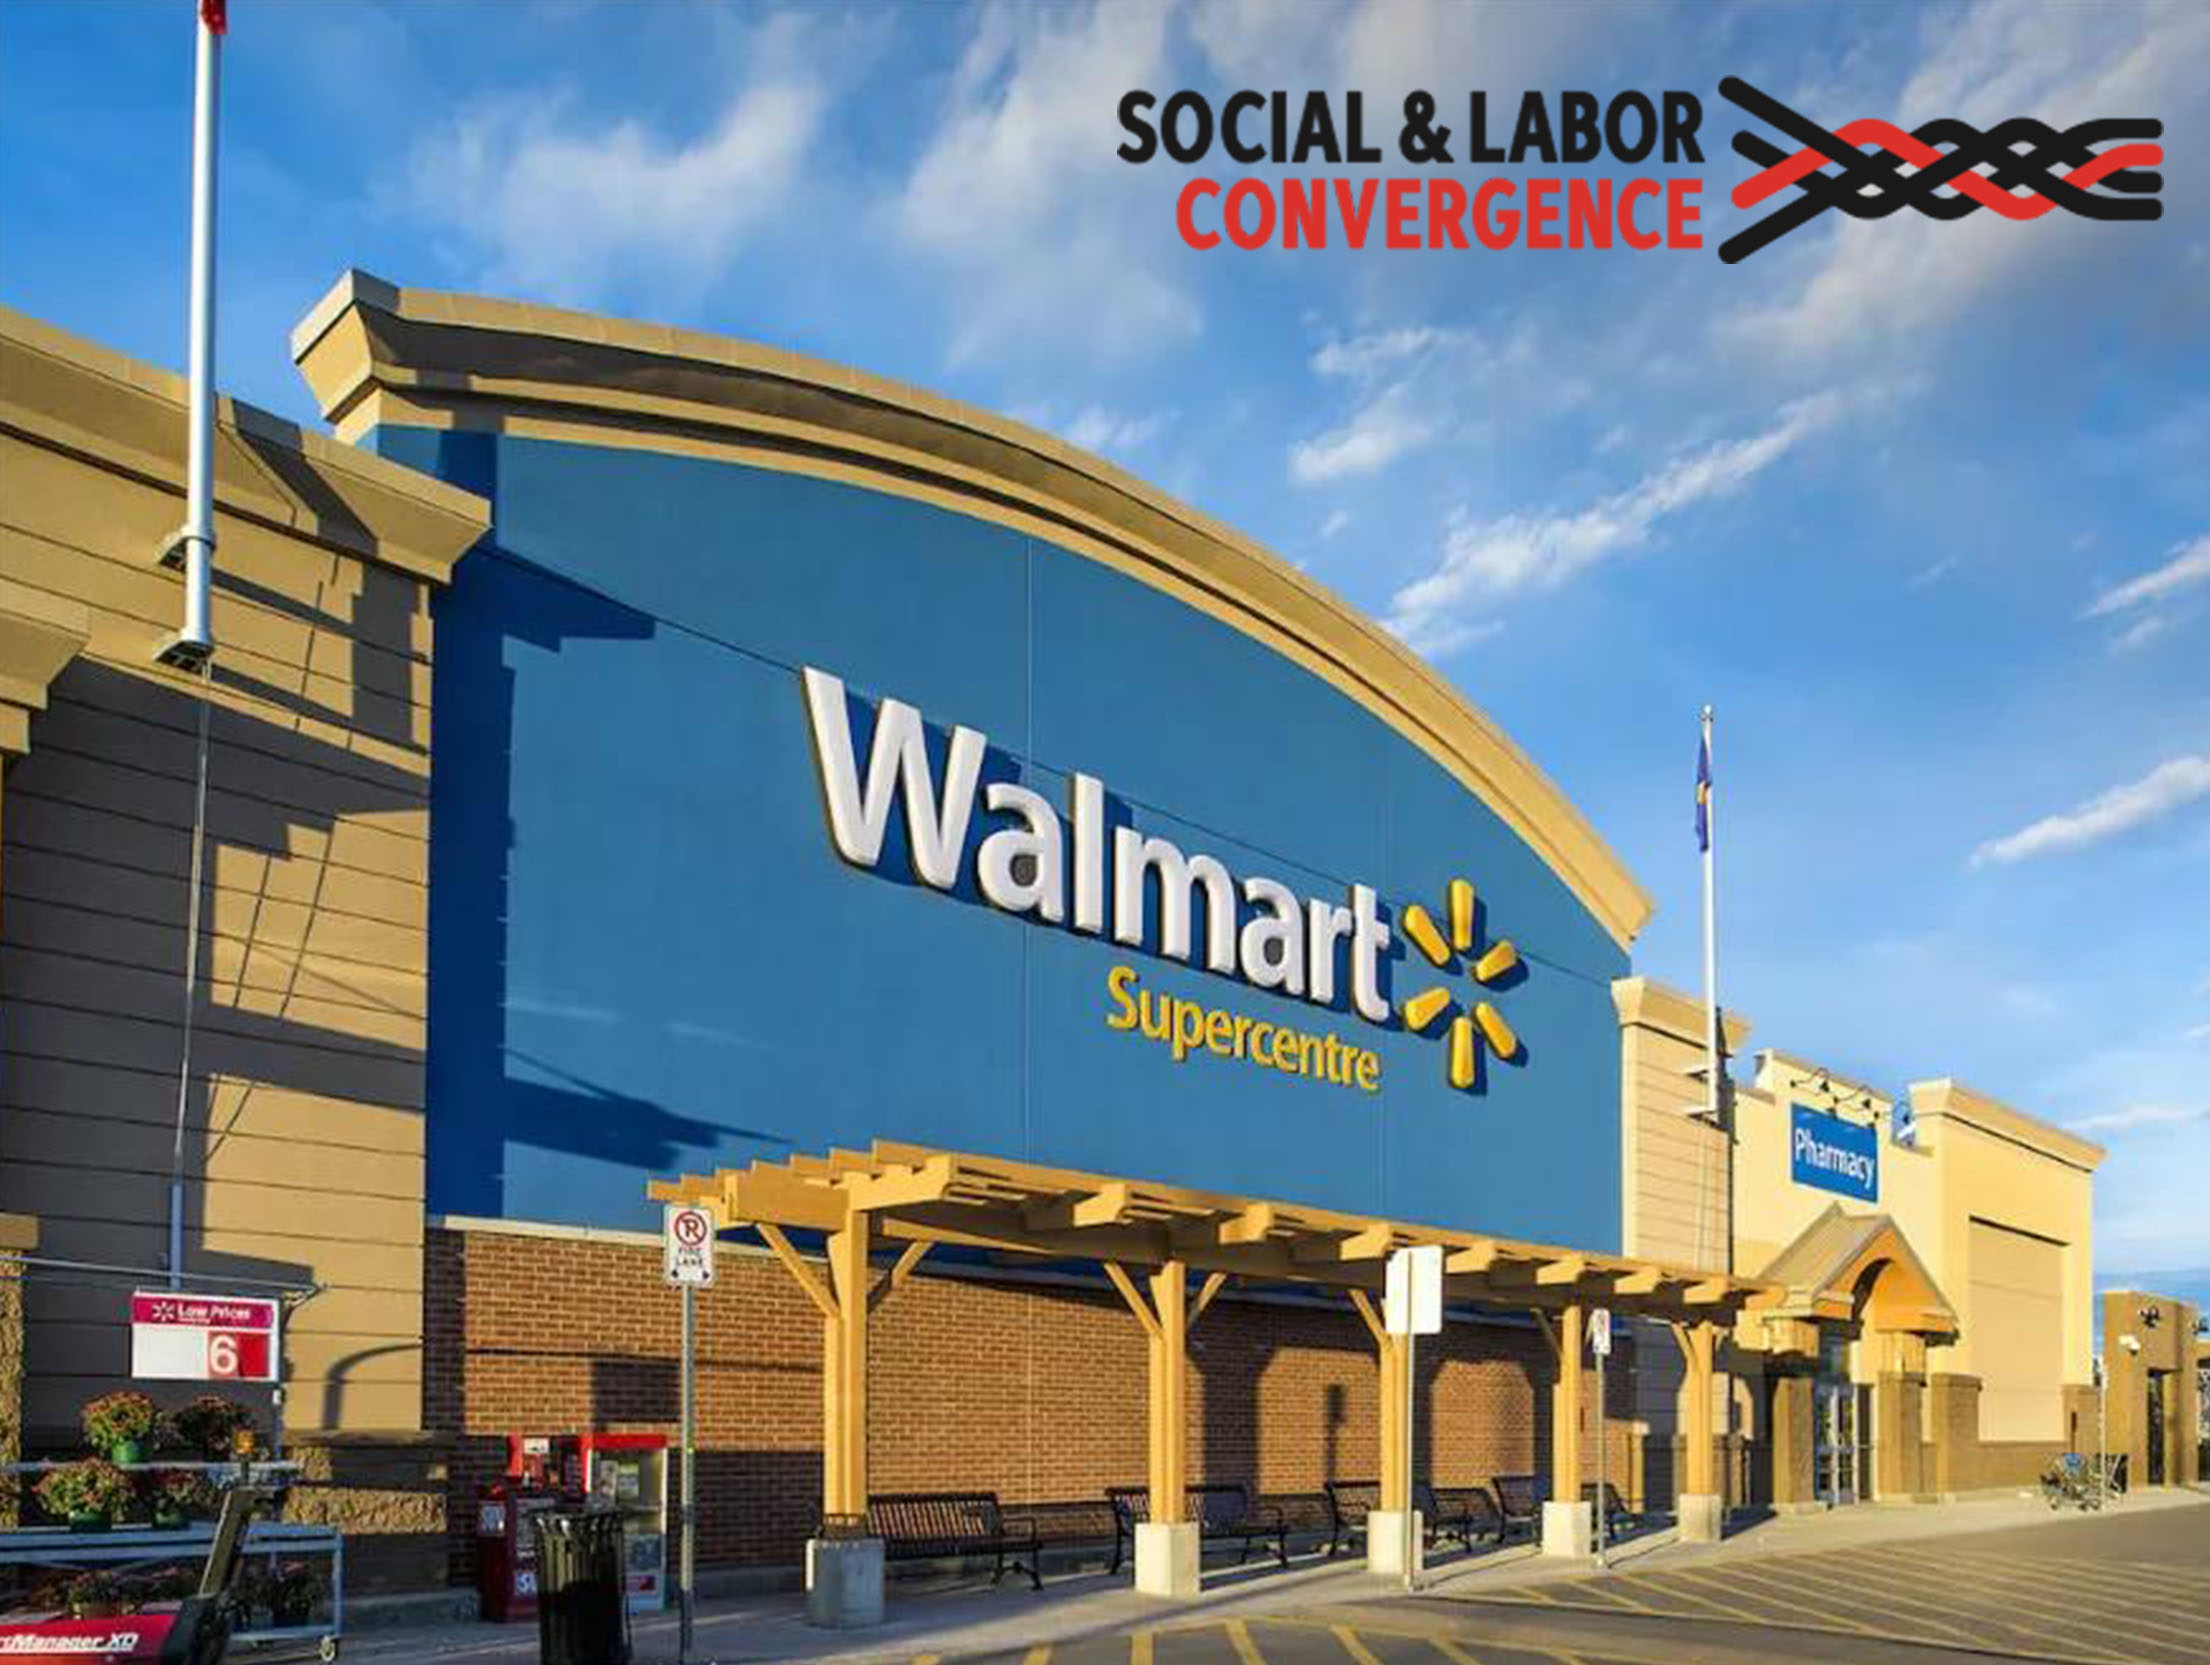 Walmart沃尔玛正式接受SLCP社会劳工整合项目验证报告